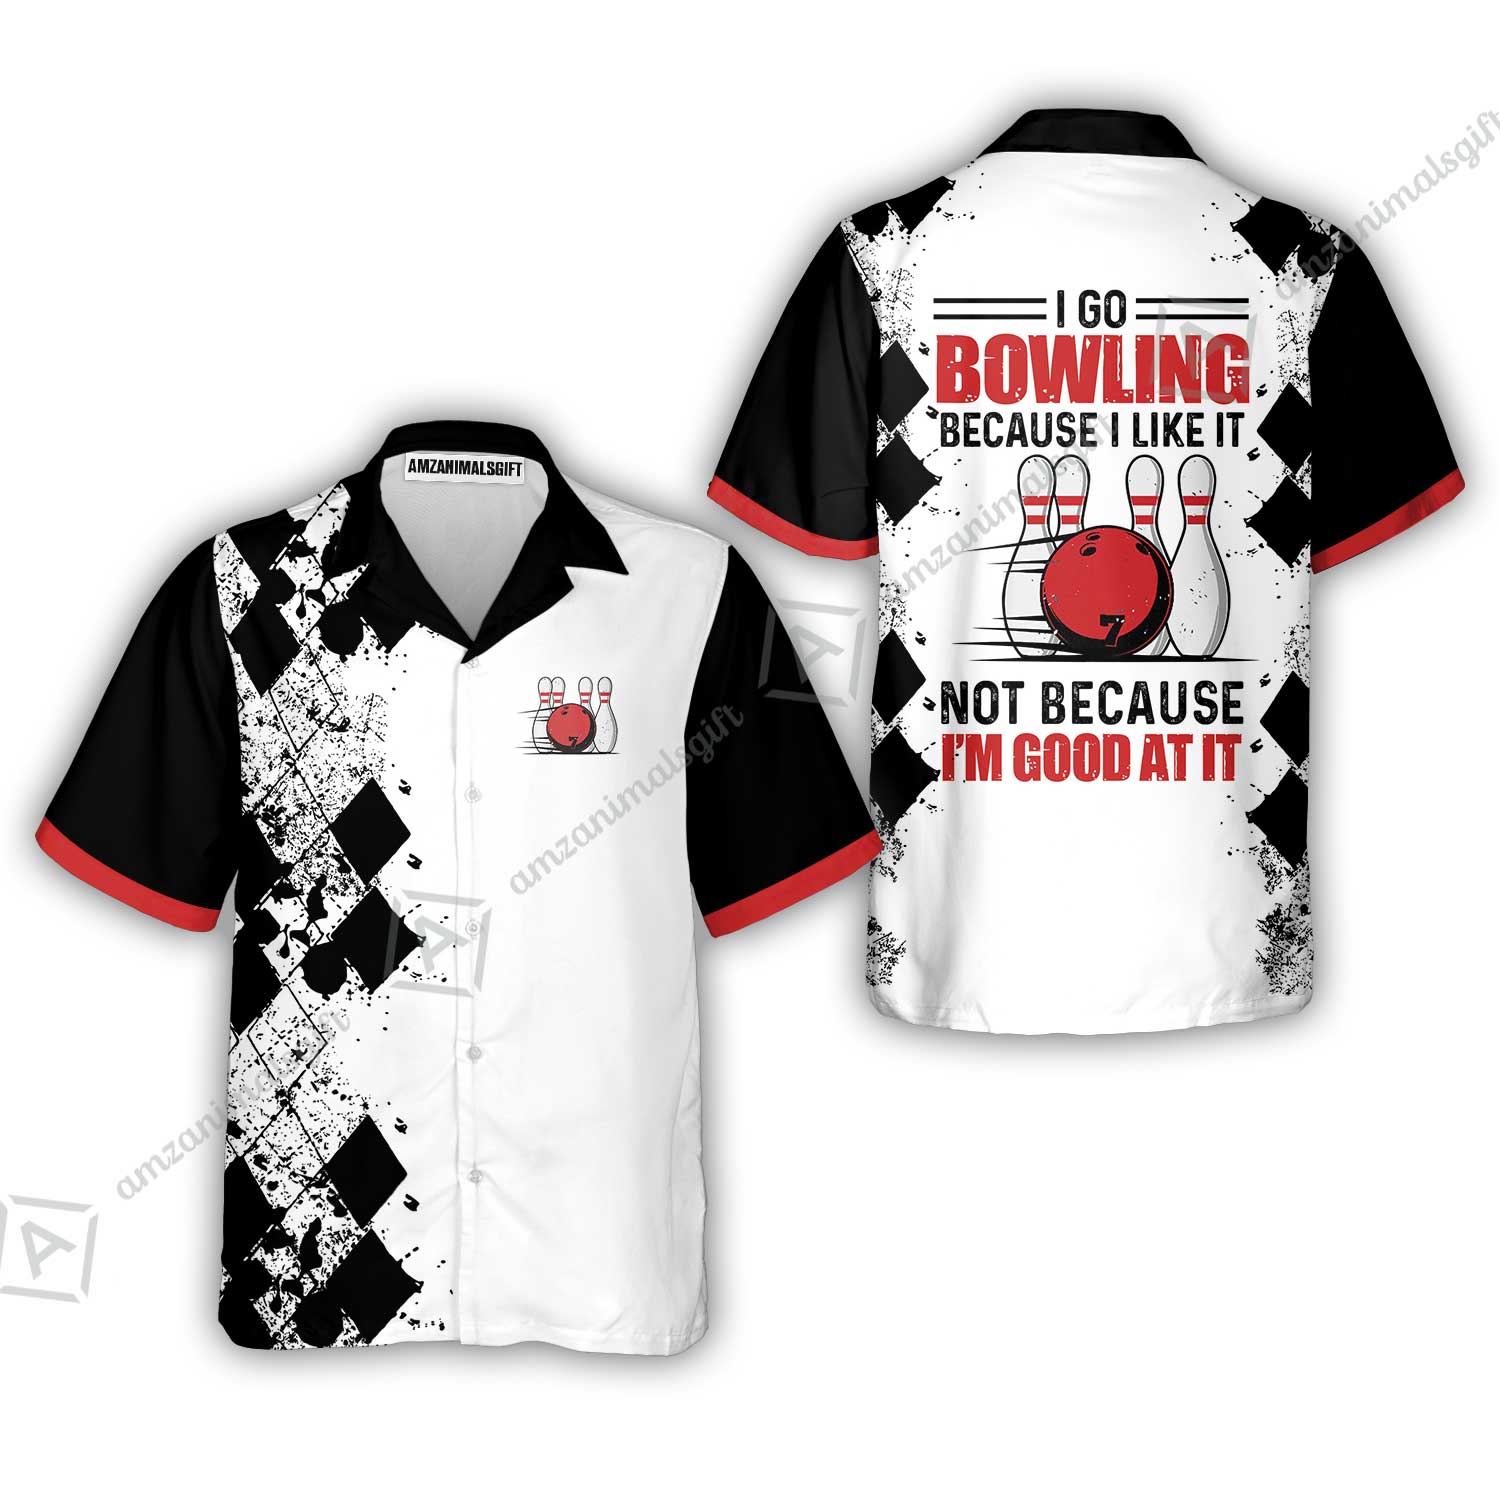 Bowling Hawaiian Shirt - I Go Bowling Because I Like It Hawaiian Shirt, Black Argyle Pattern Shirt Design, Best Bowling Shirt